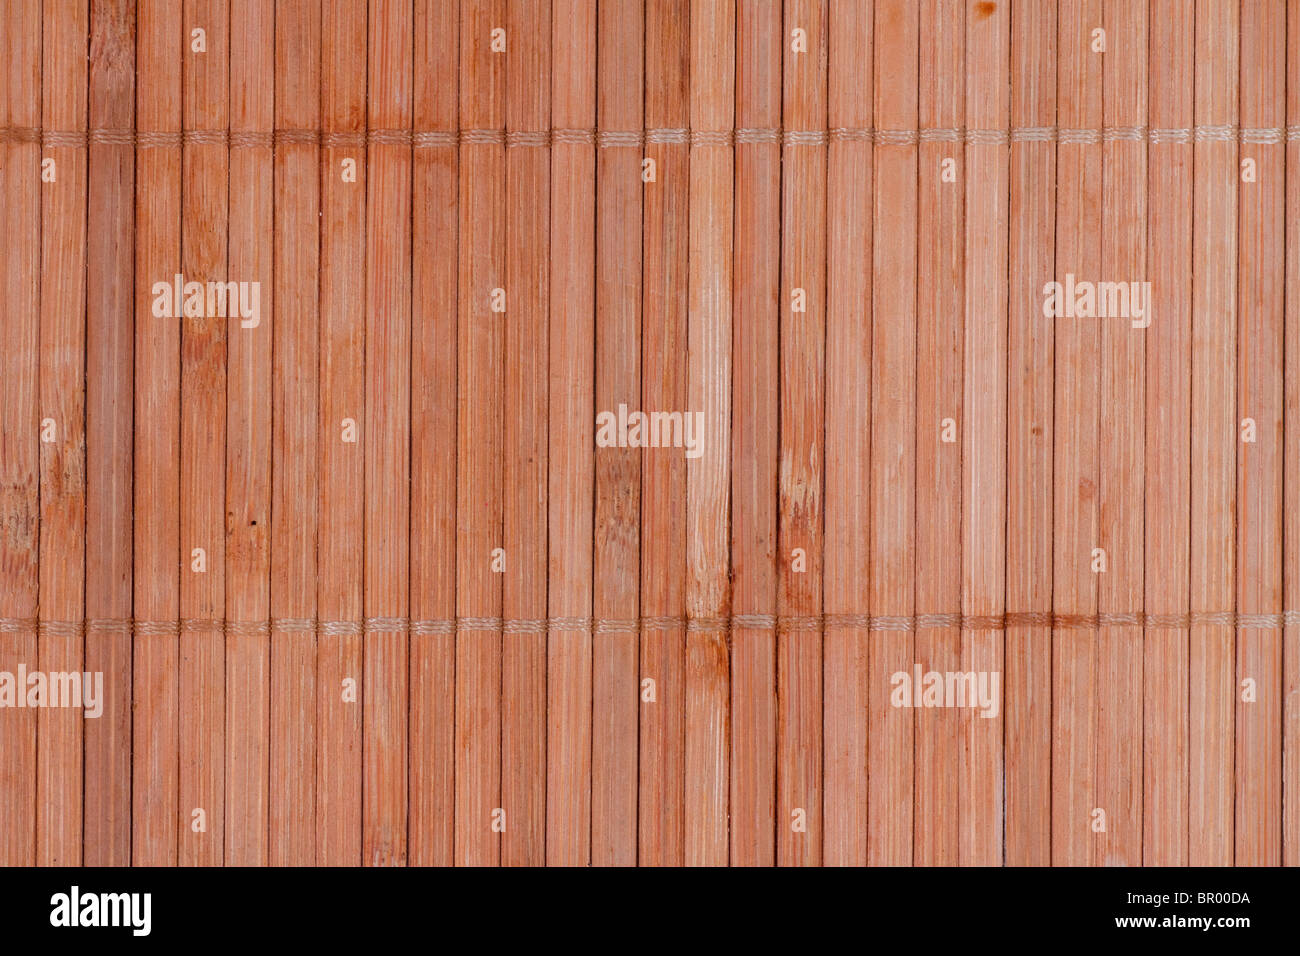 Bamboo background board. horizontal pattern. nice texture. Stock Photo